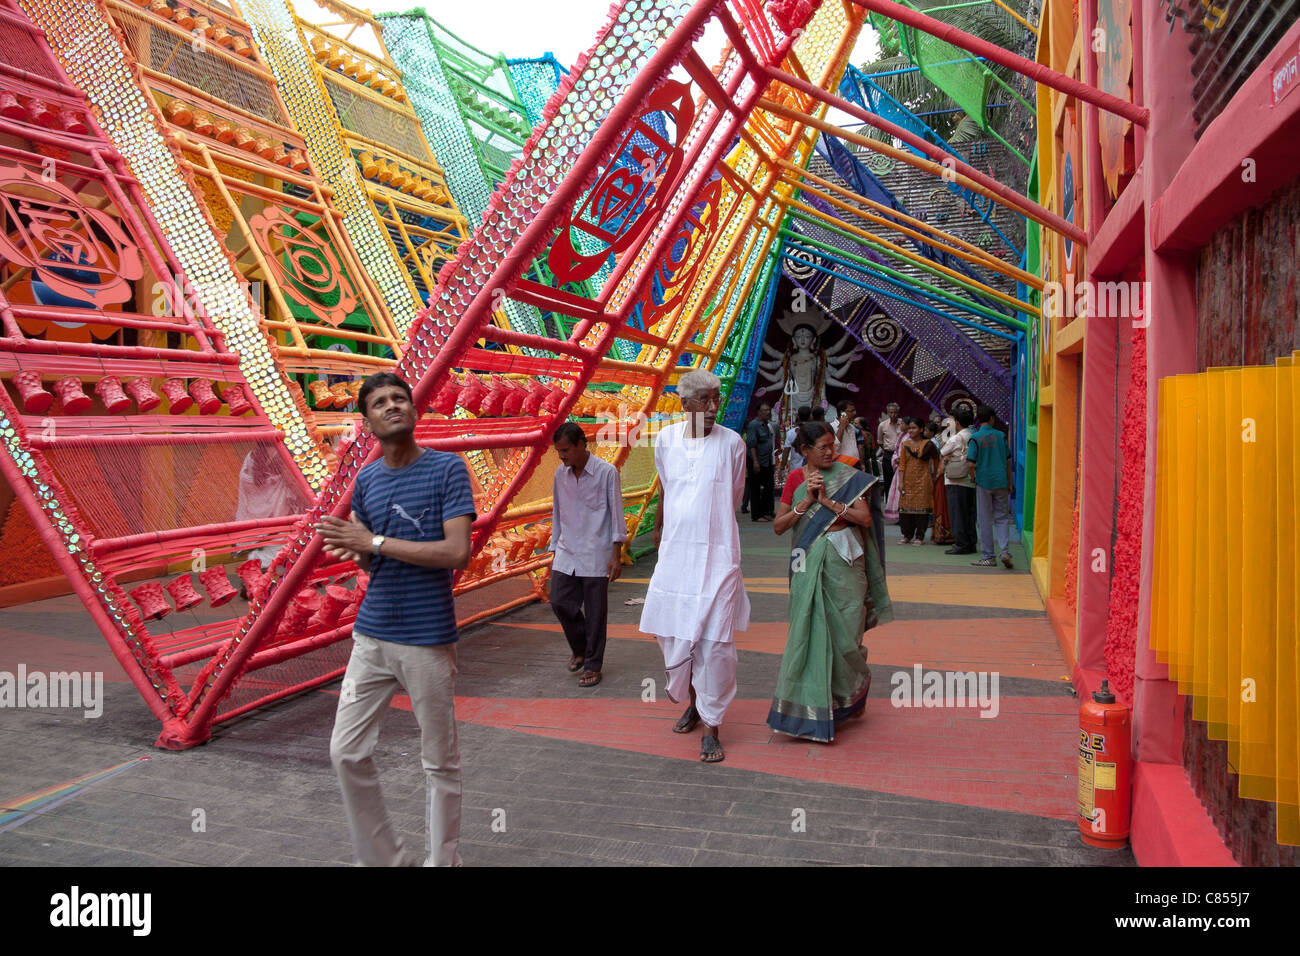 Artistico e colorato Durga puja pandal dal Parco Vivekanand Athletic Club in Haridevpur, Kolkata (Calcutta), West Bengal, India. Foto Stock